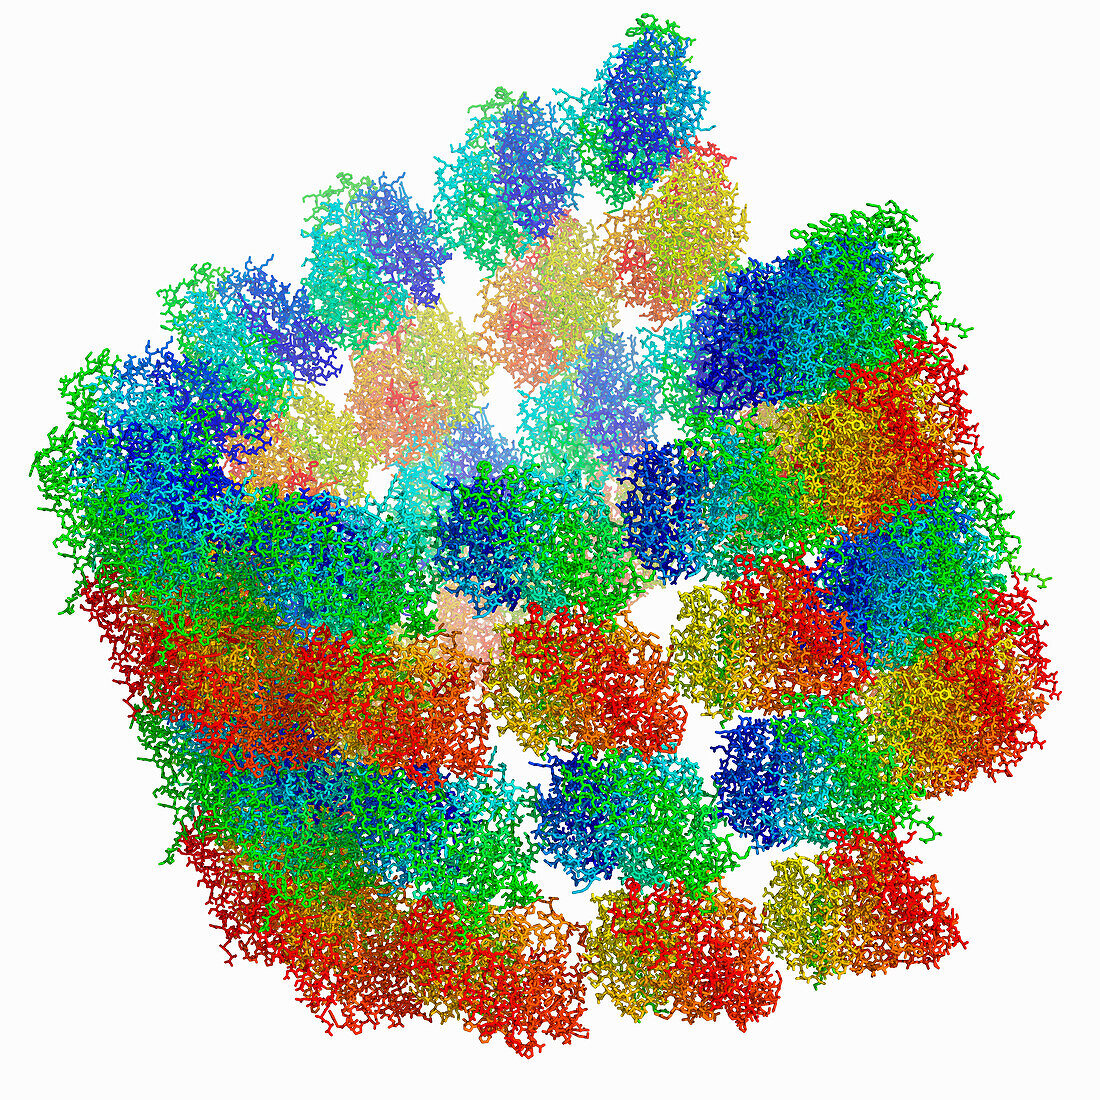 Microtubule with tubulin oligomers, molecular model